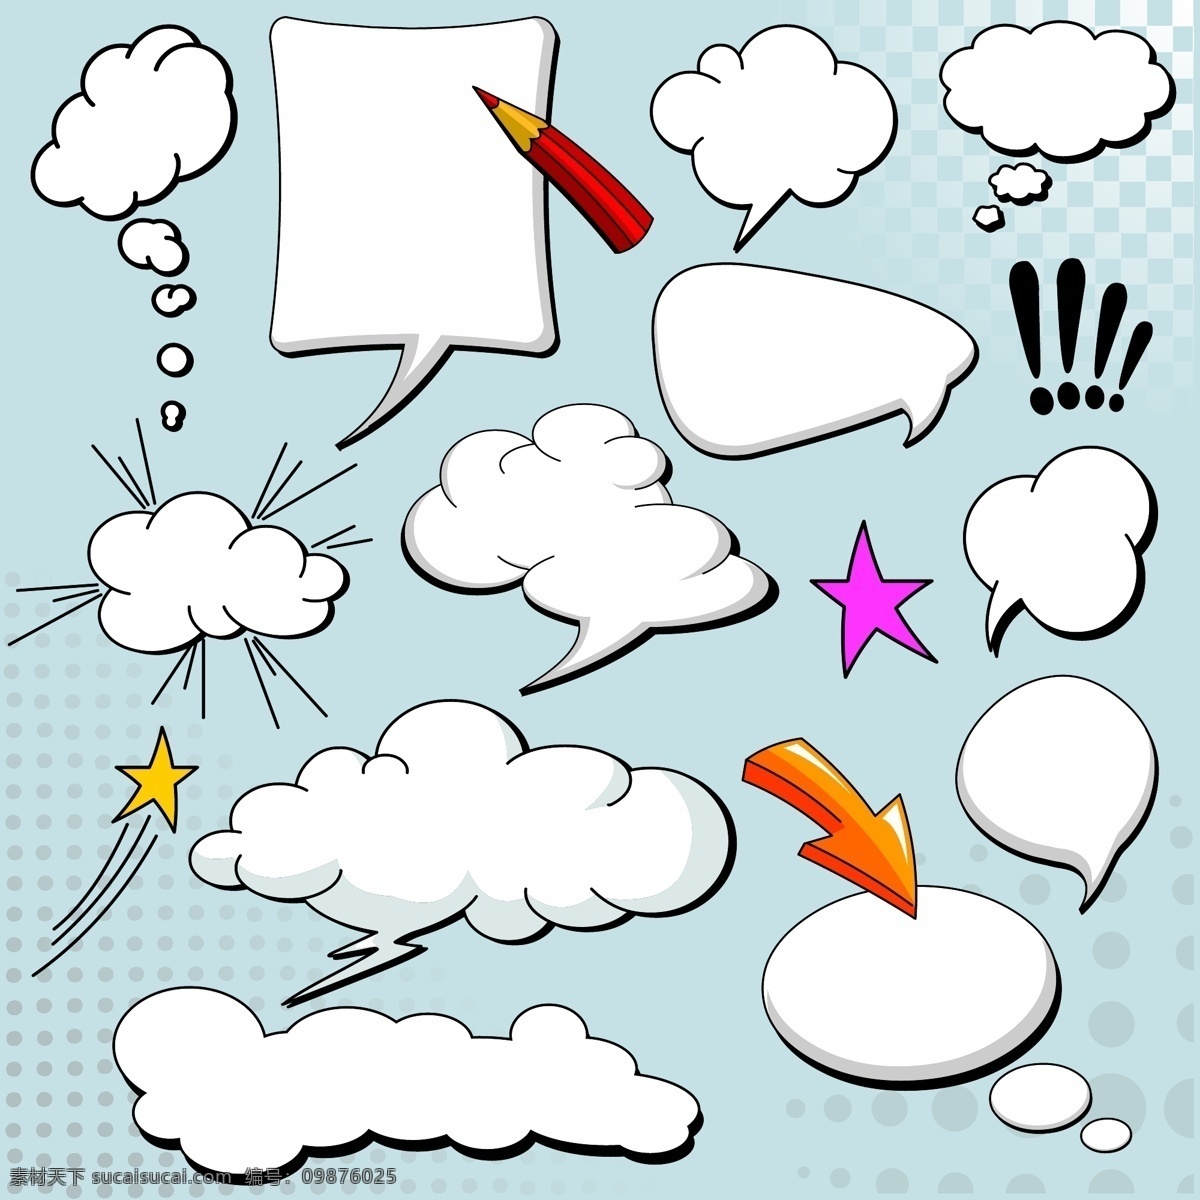 cartoonstyle 蘑菇 云层 对话 矢量 爆炸 对话框 箭 漫画 铅笔 图形 云 飞格 蘑菇云 psd源文件